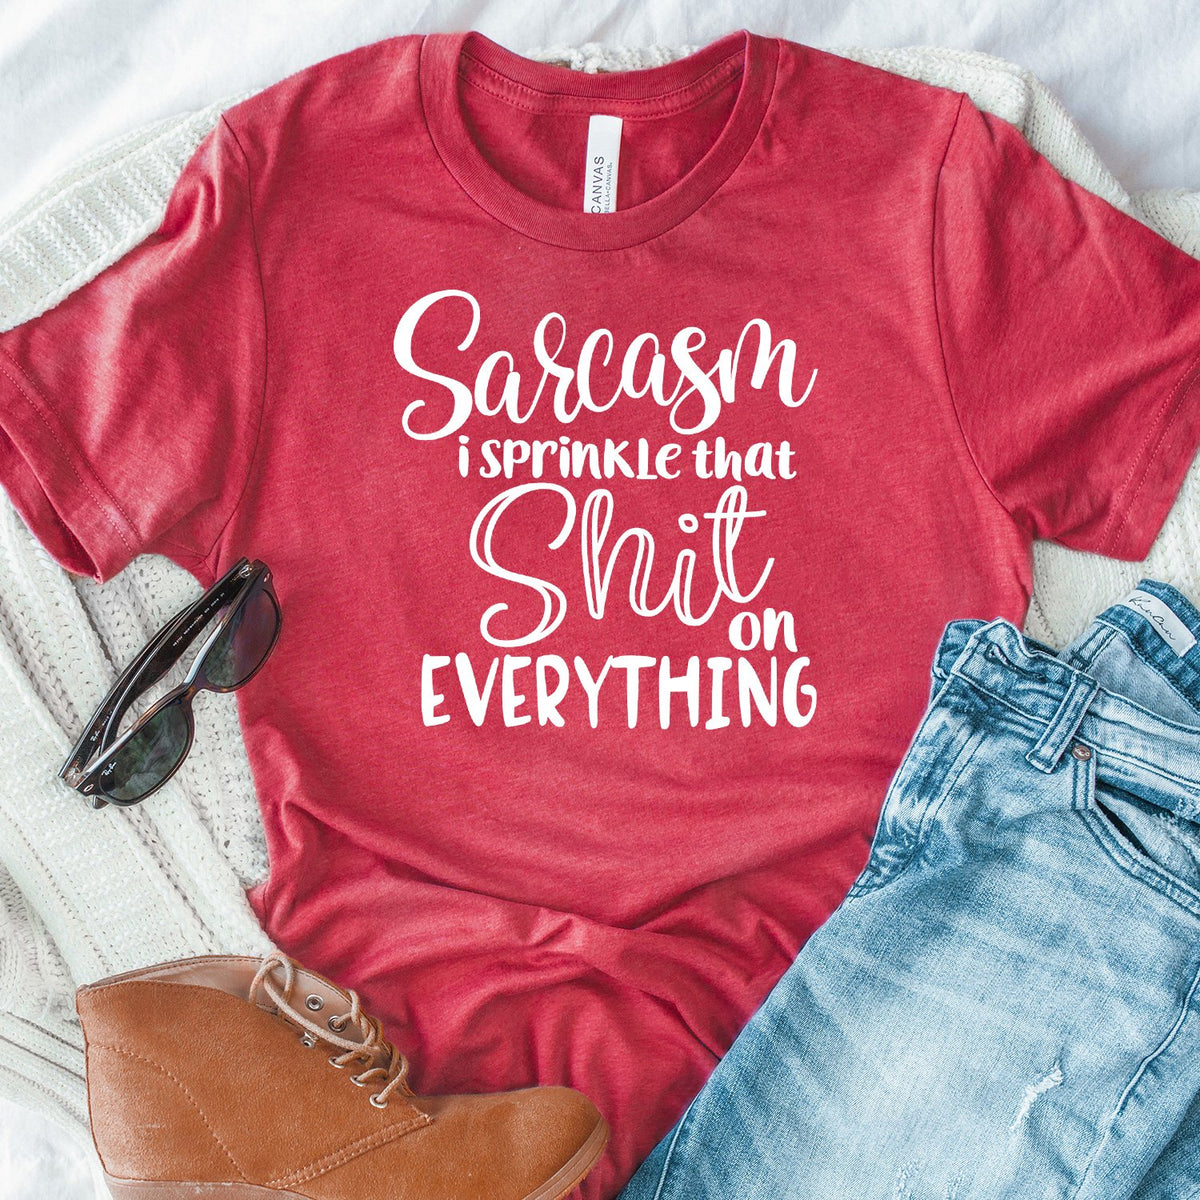 Sarcasm I Sprinkle That Shit On Everything - Short Sleeve Tee Shirt